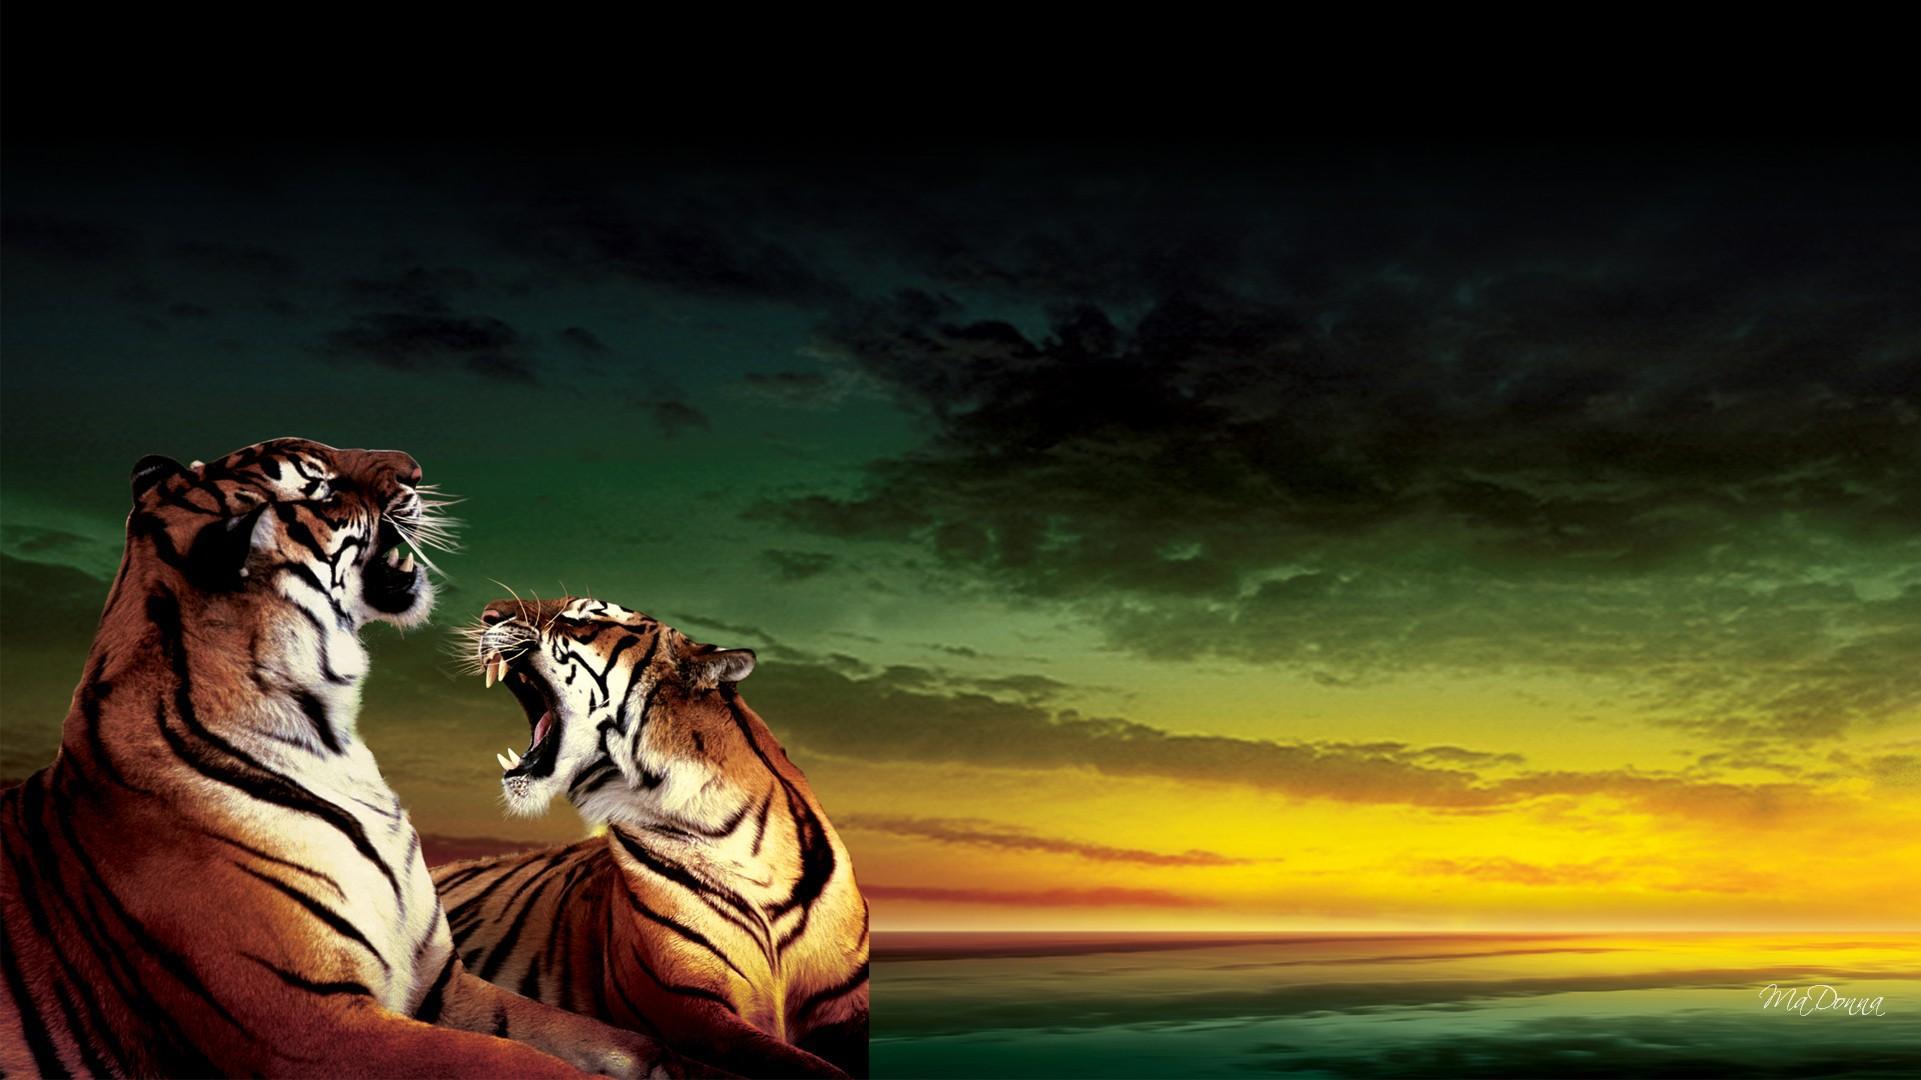 Tigers Roar - Tiger Roars Background Hd - HD Wallpaper 